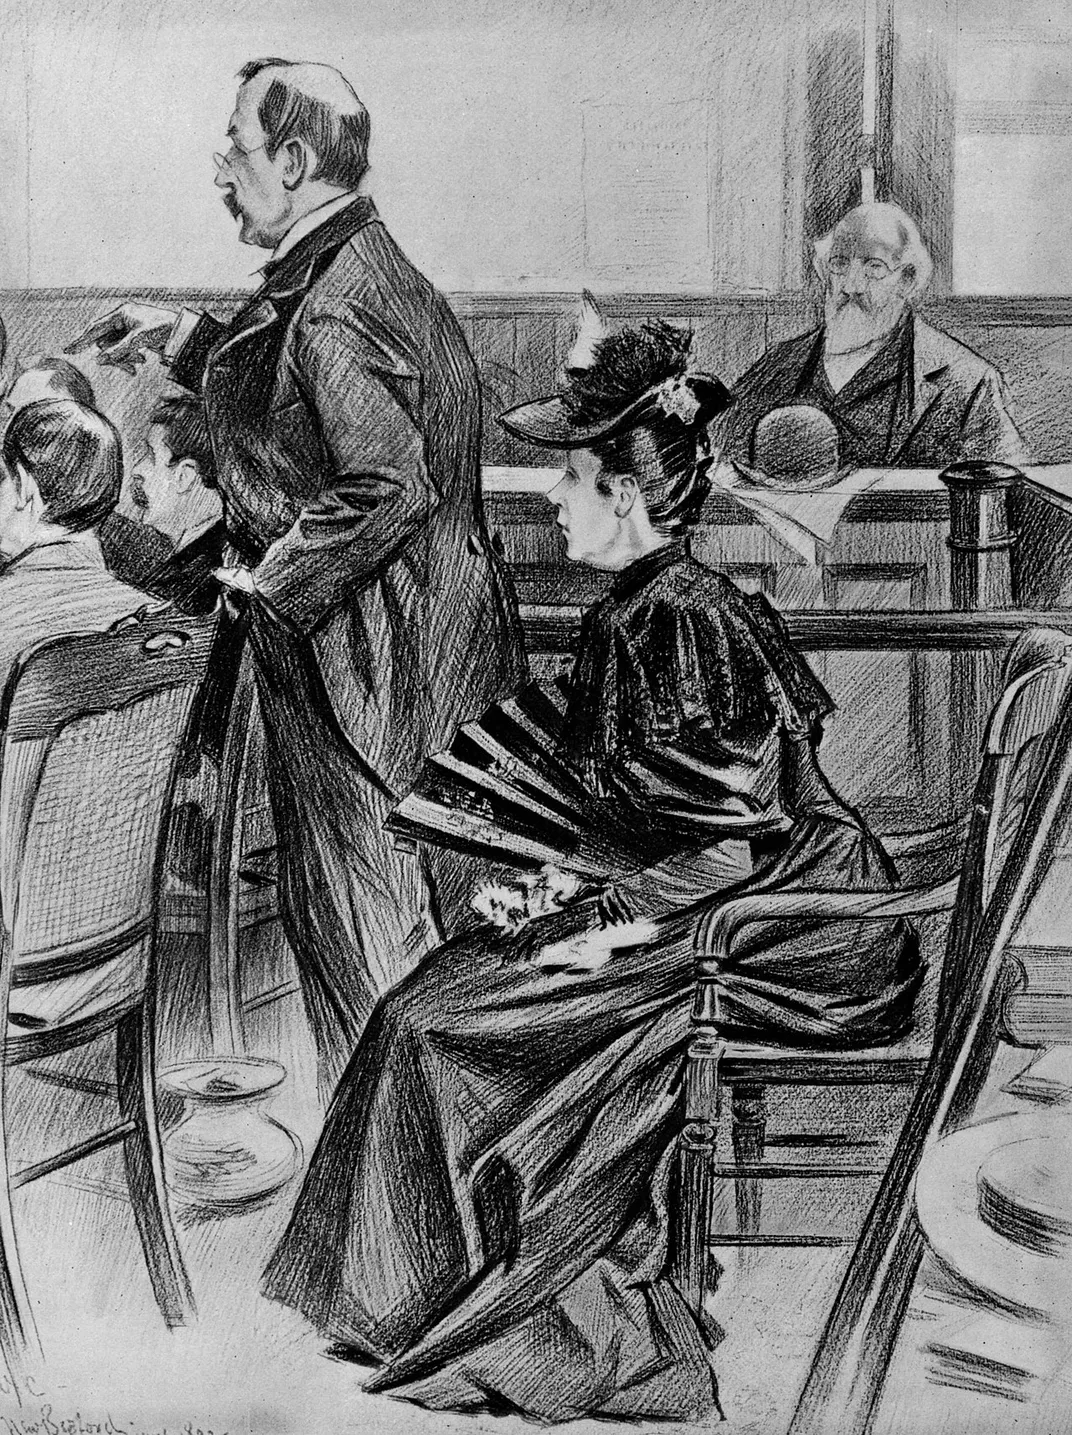 A sketch of Lizzie Borden in court